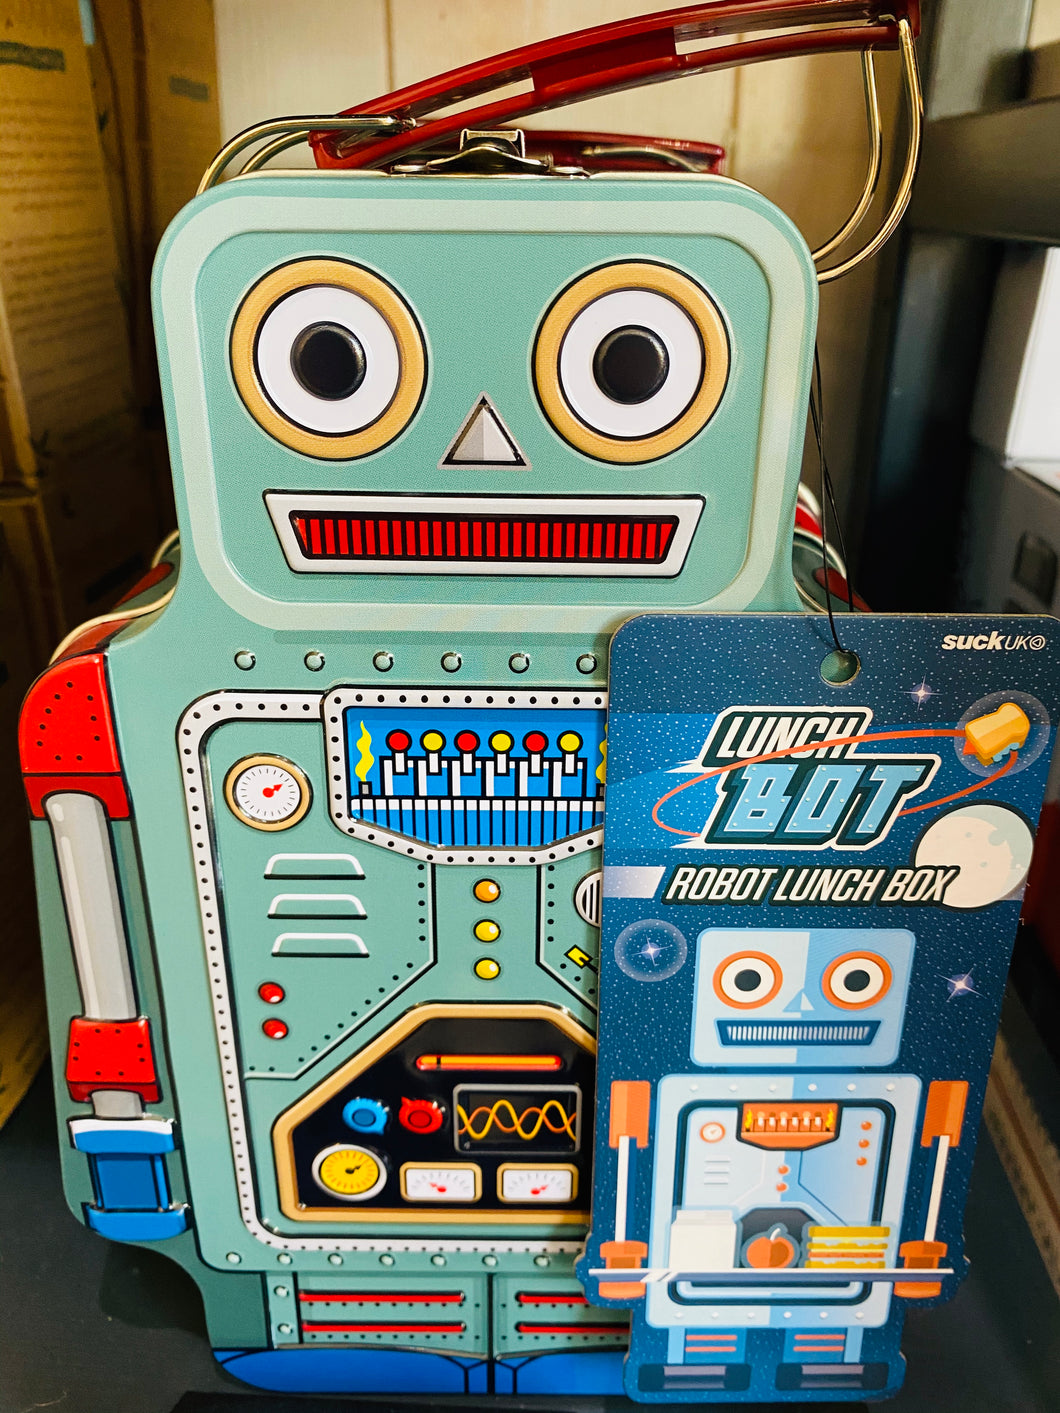 Lunch box robot